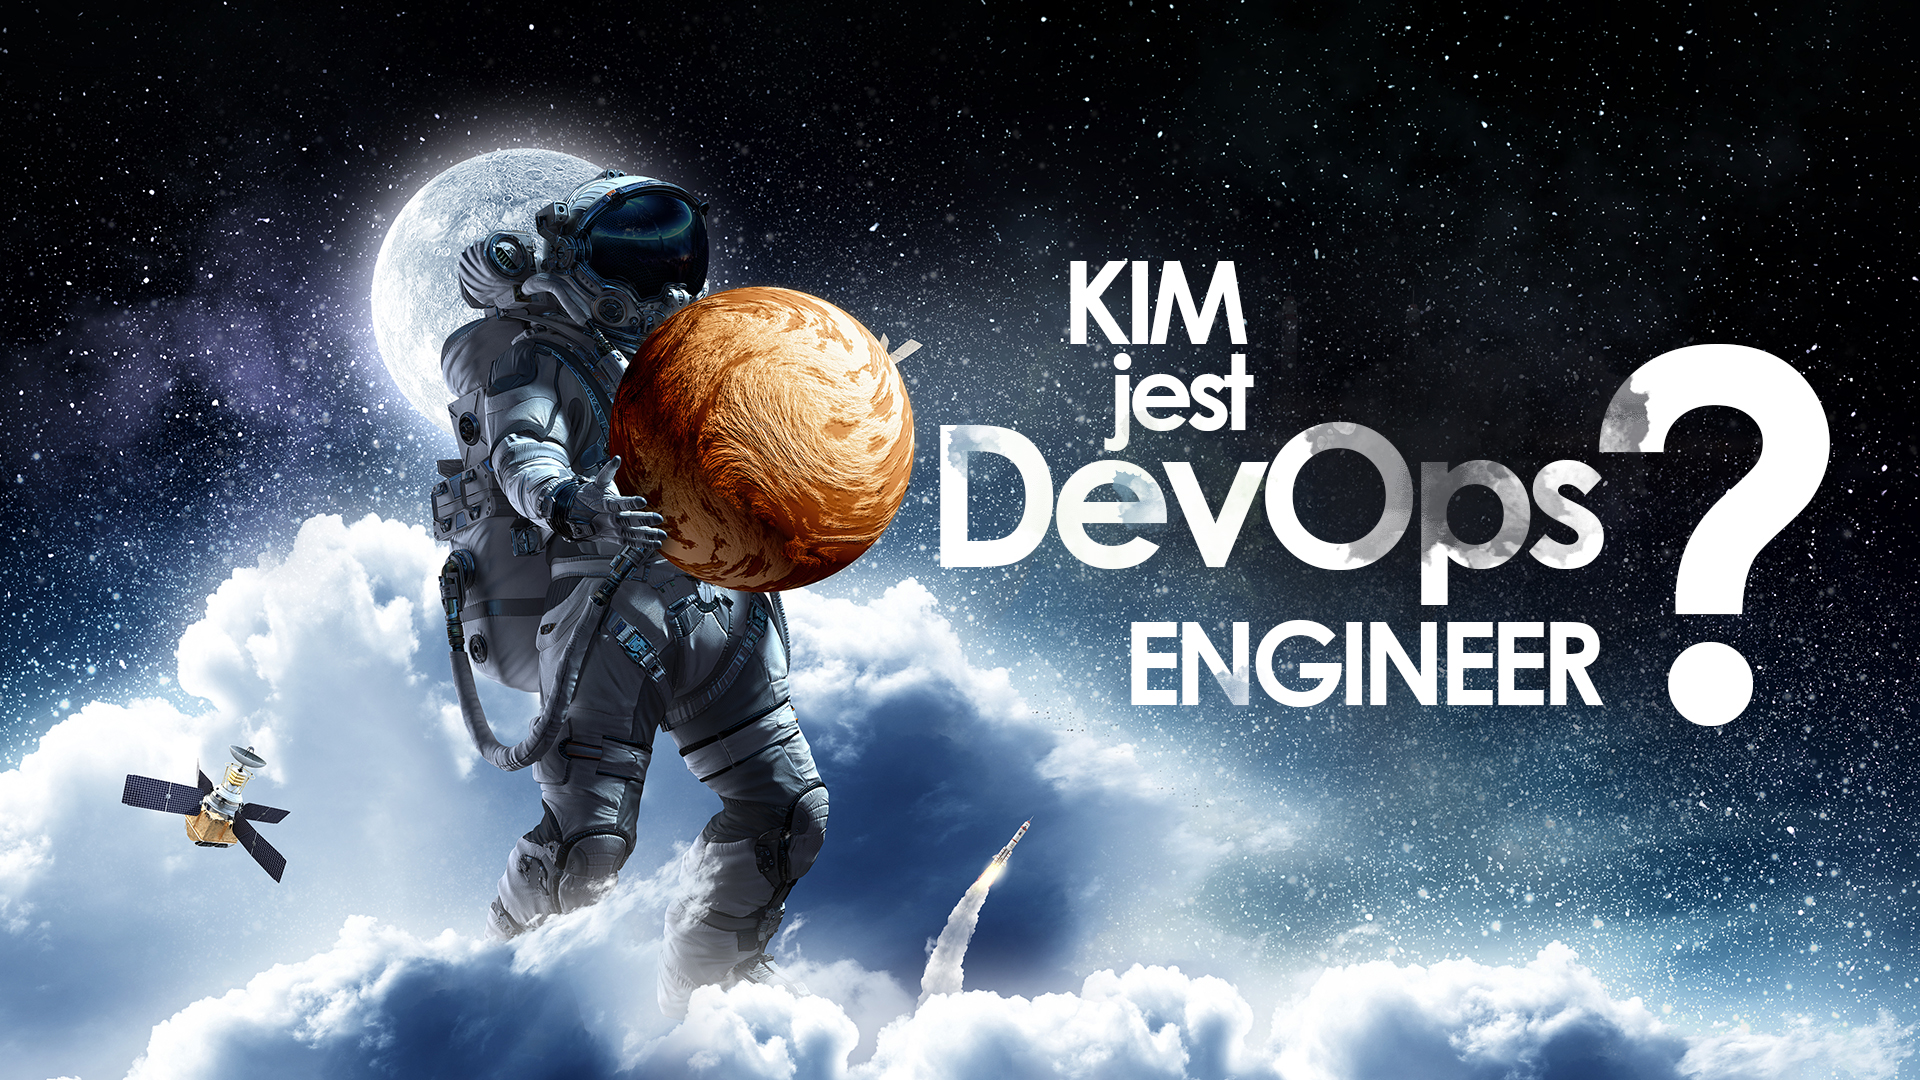 Kim jest DevOps Engineer?